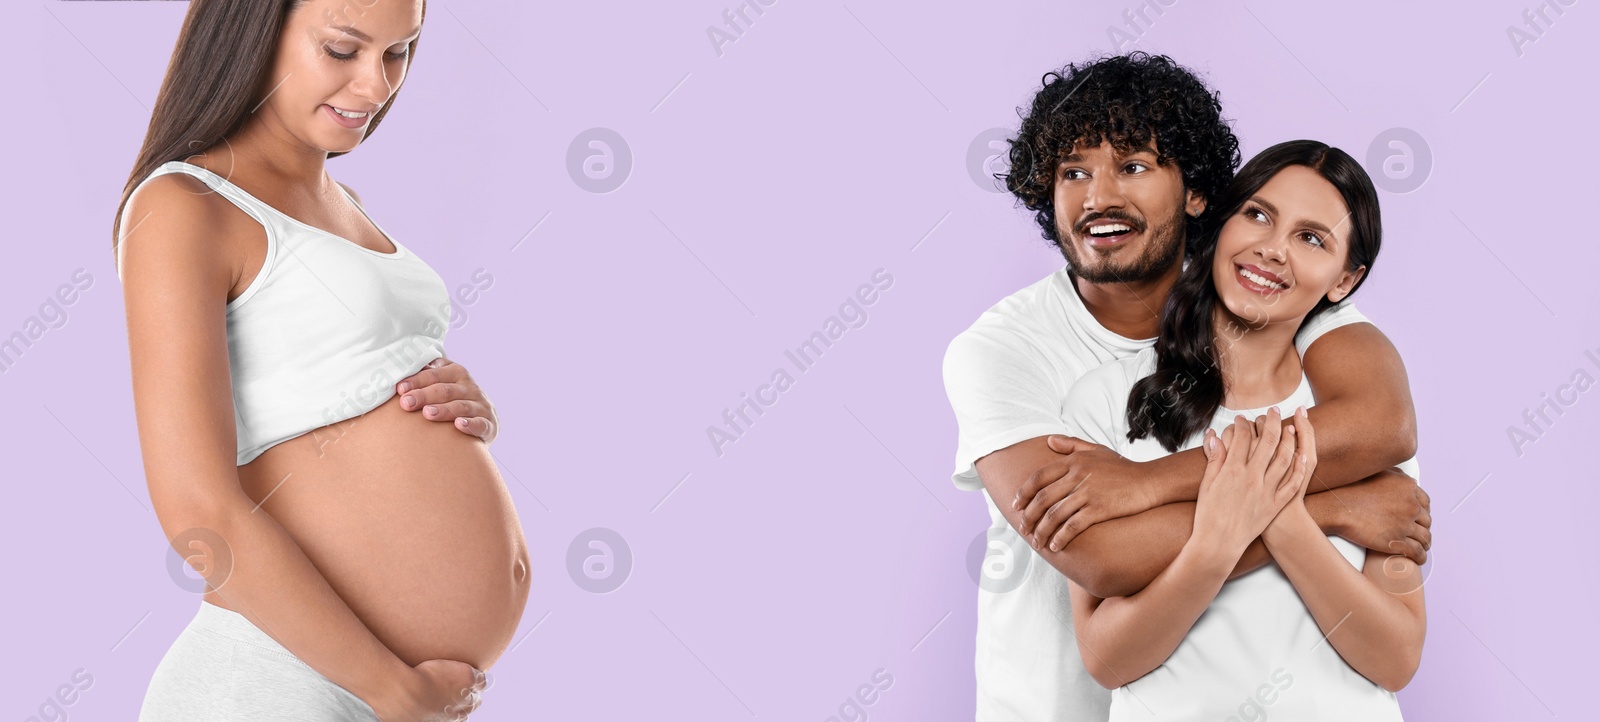 Image of Surrogate mother and intended parents on lavender background. Banner design